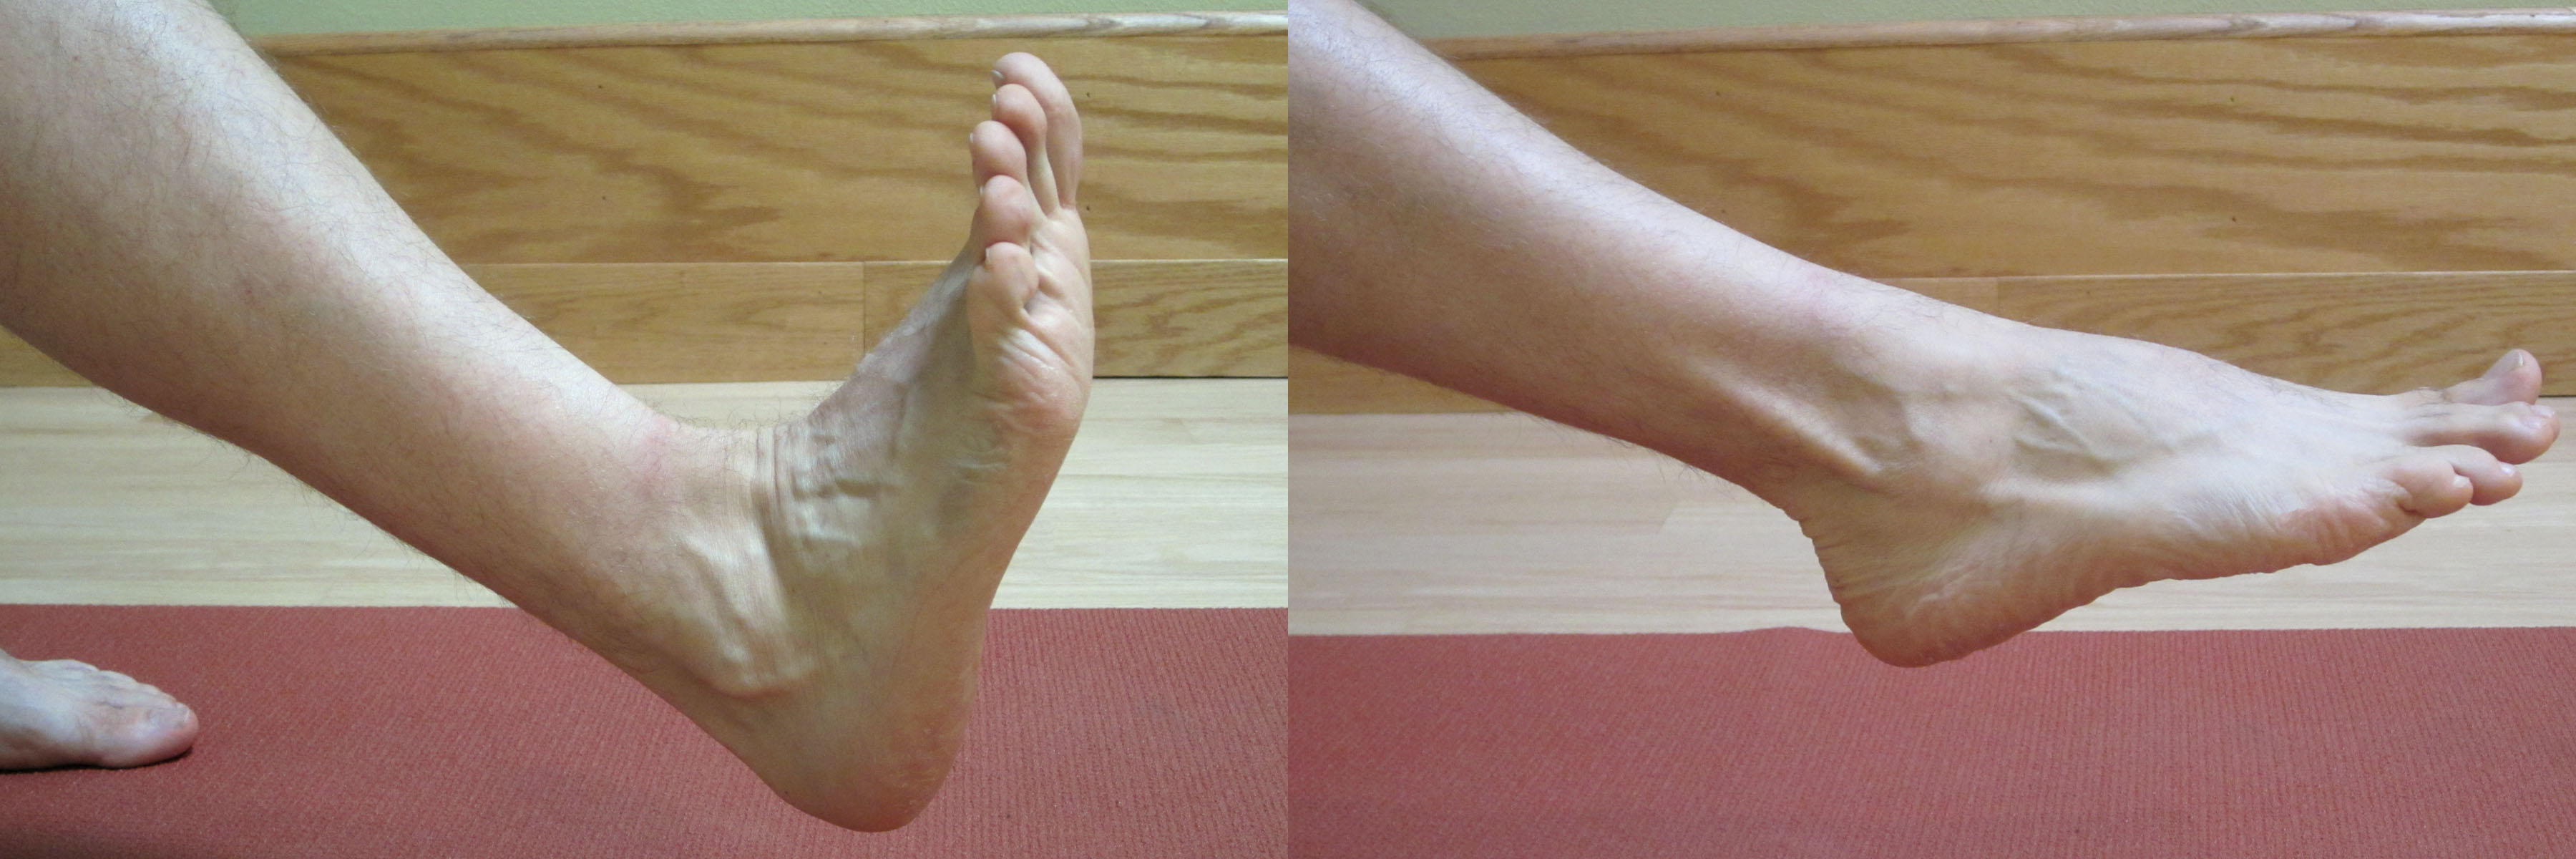 New Ankle Strengthening / Sprained Ankle Rehab Exercise